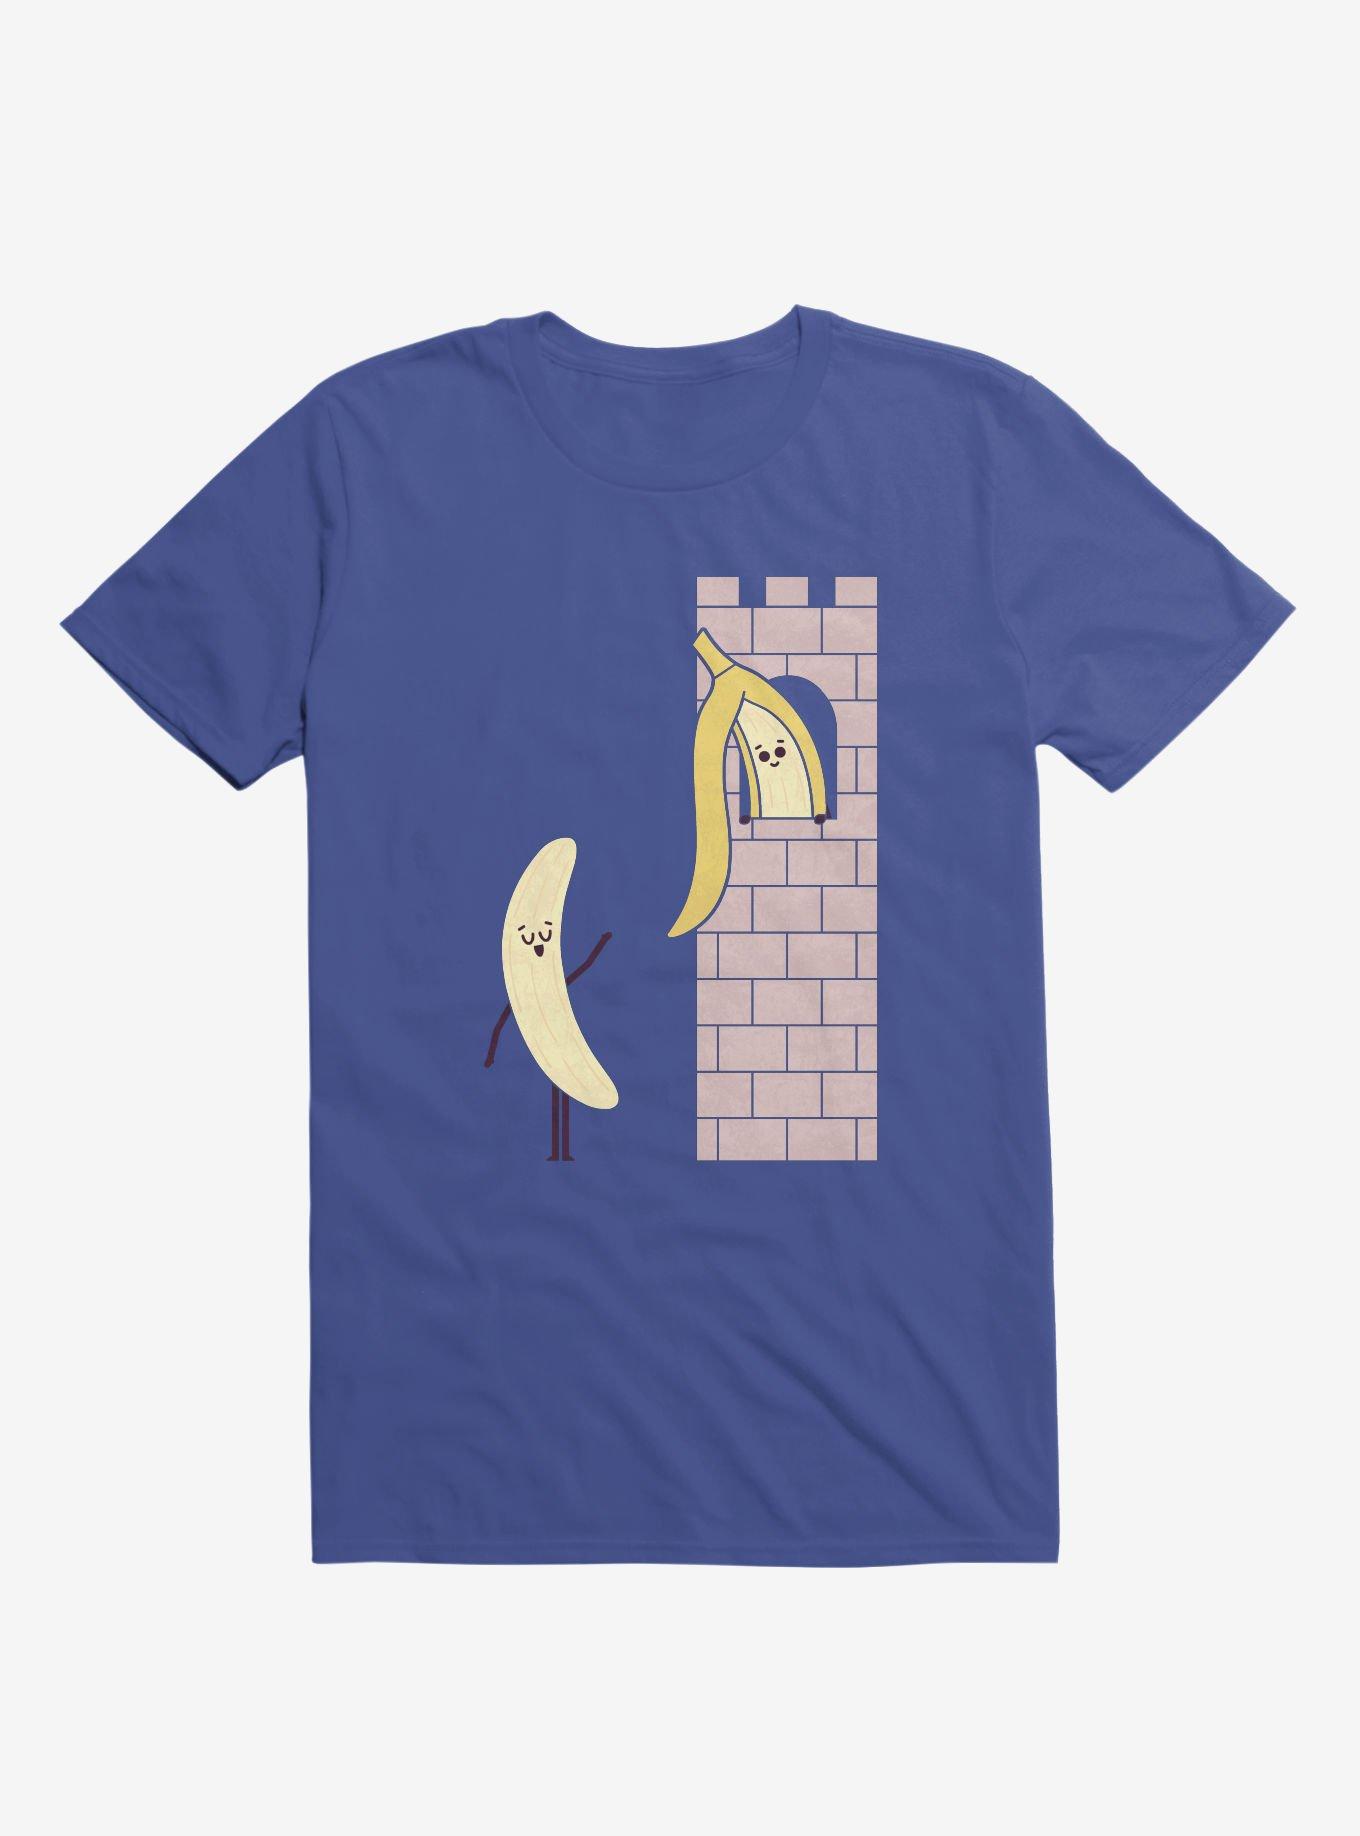 Let Down Your Peel Banana In Castle Royal Blue T-Shirt, , hi-res